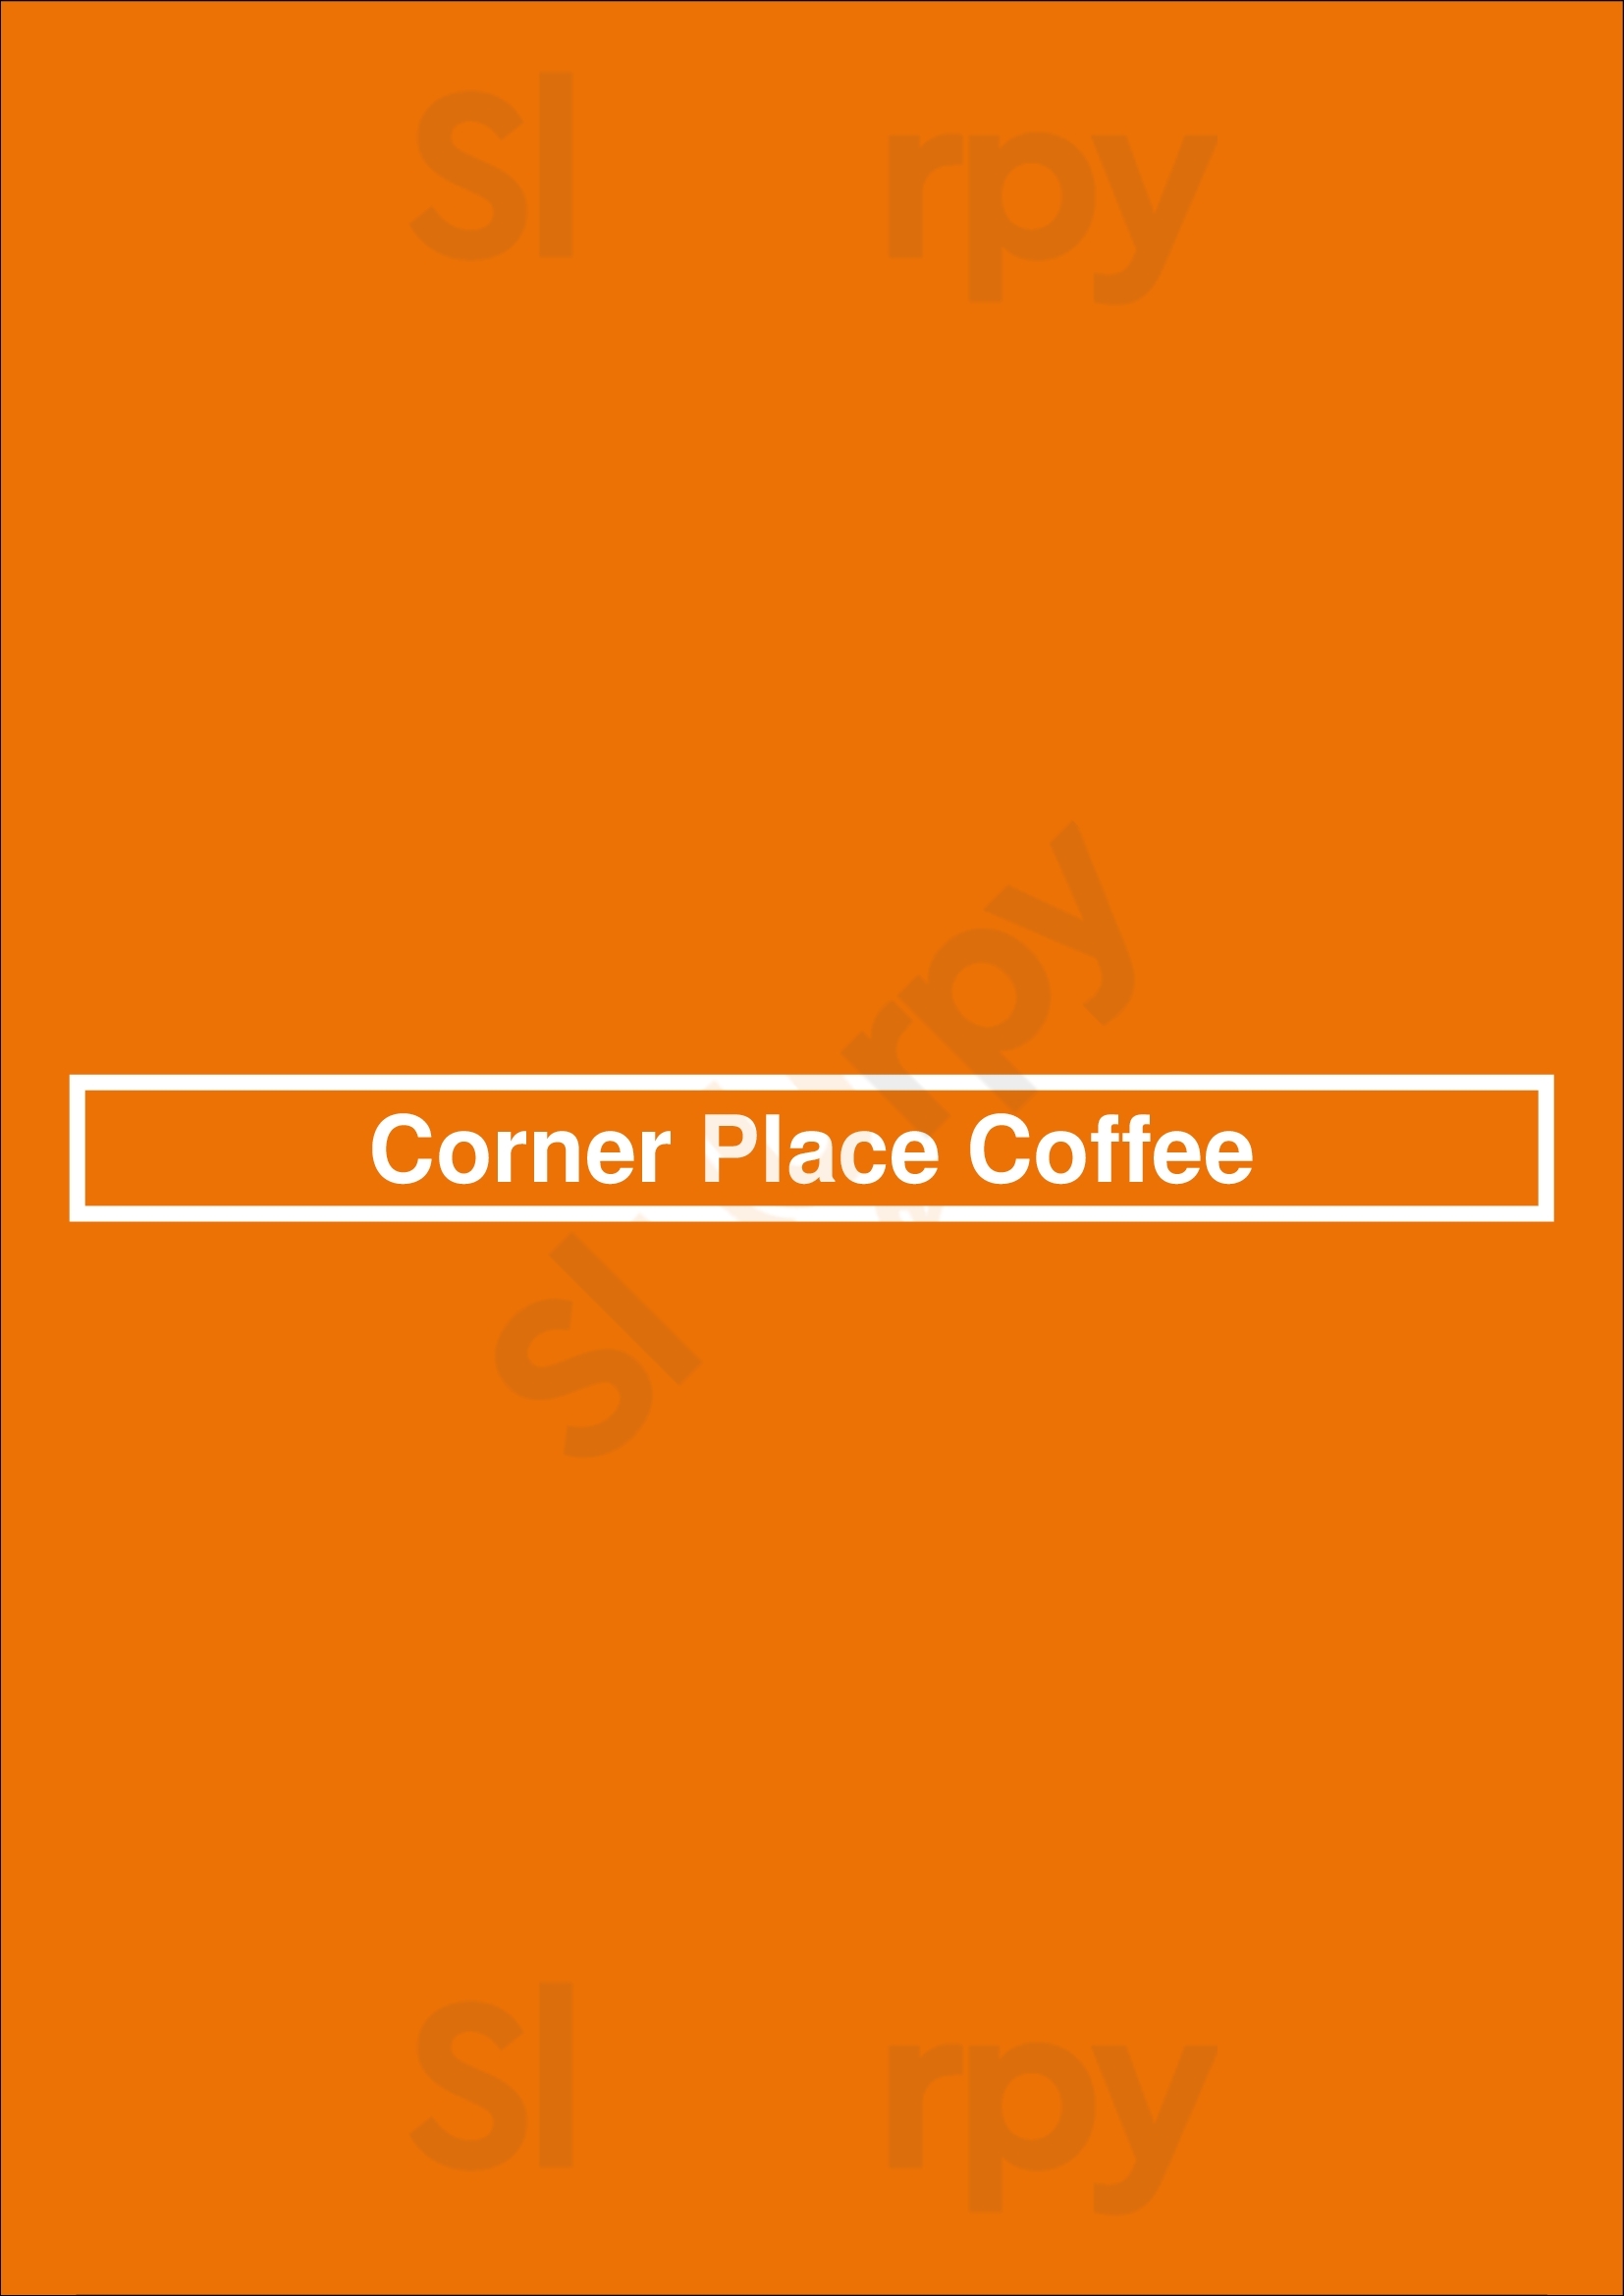 Corner Place Coffee Whittier Menu - 1